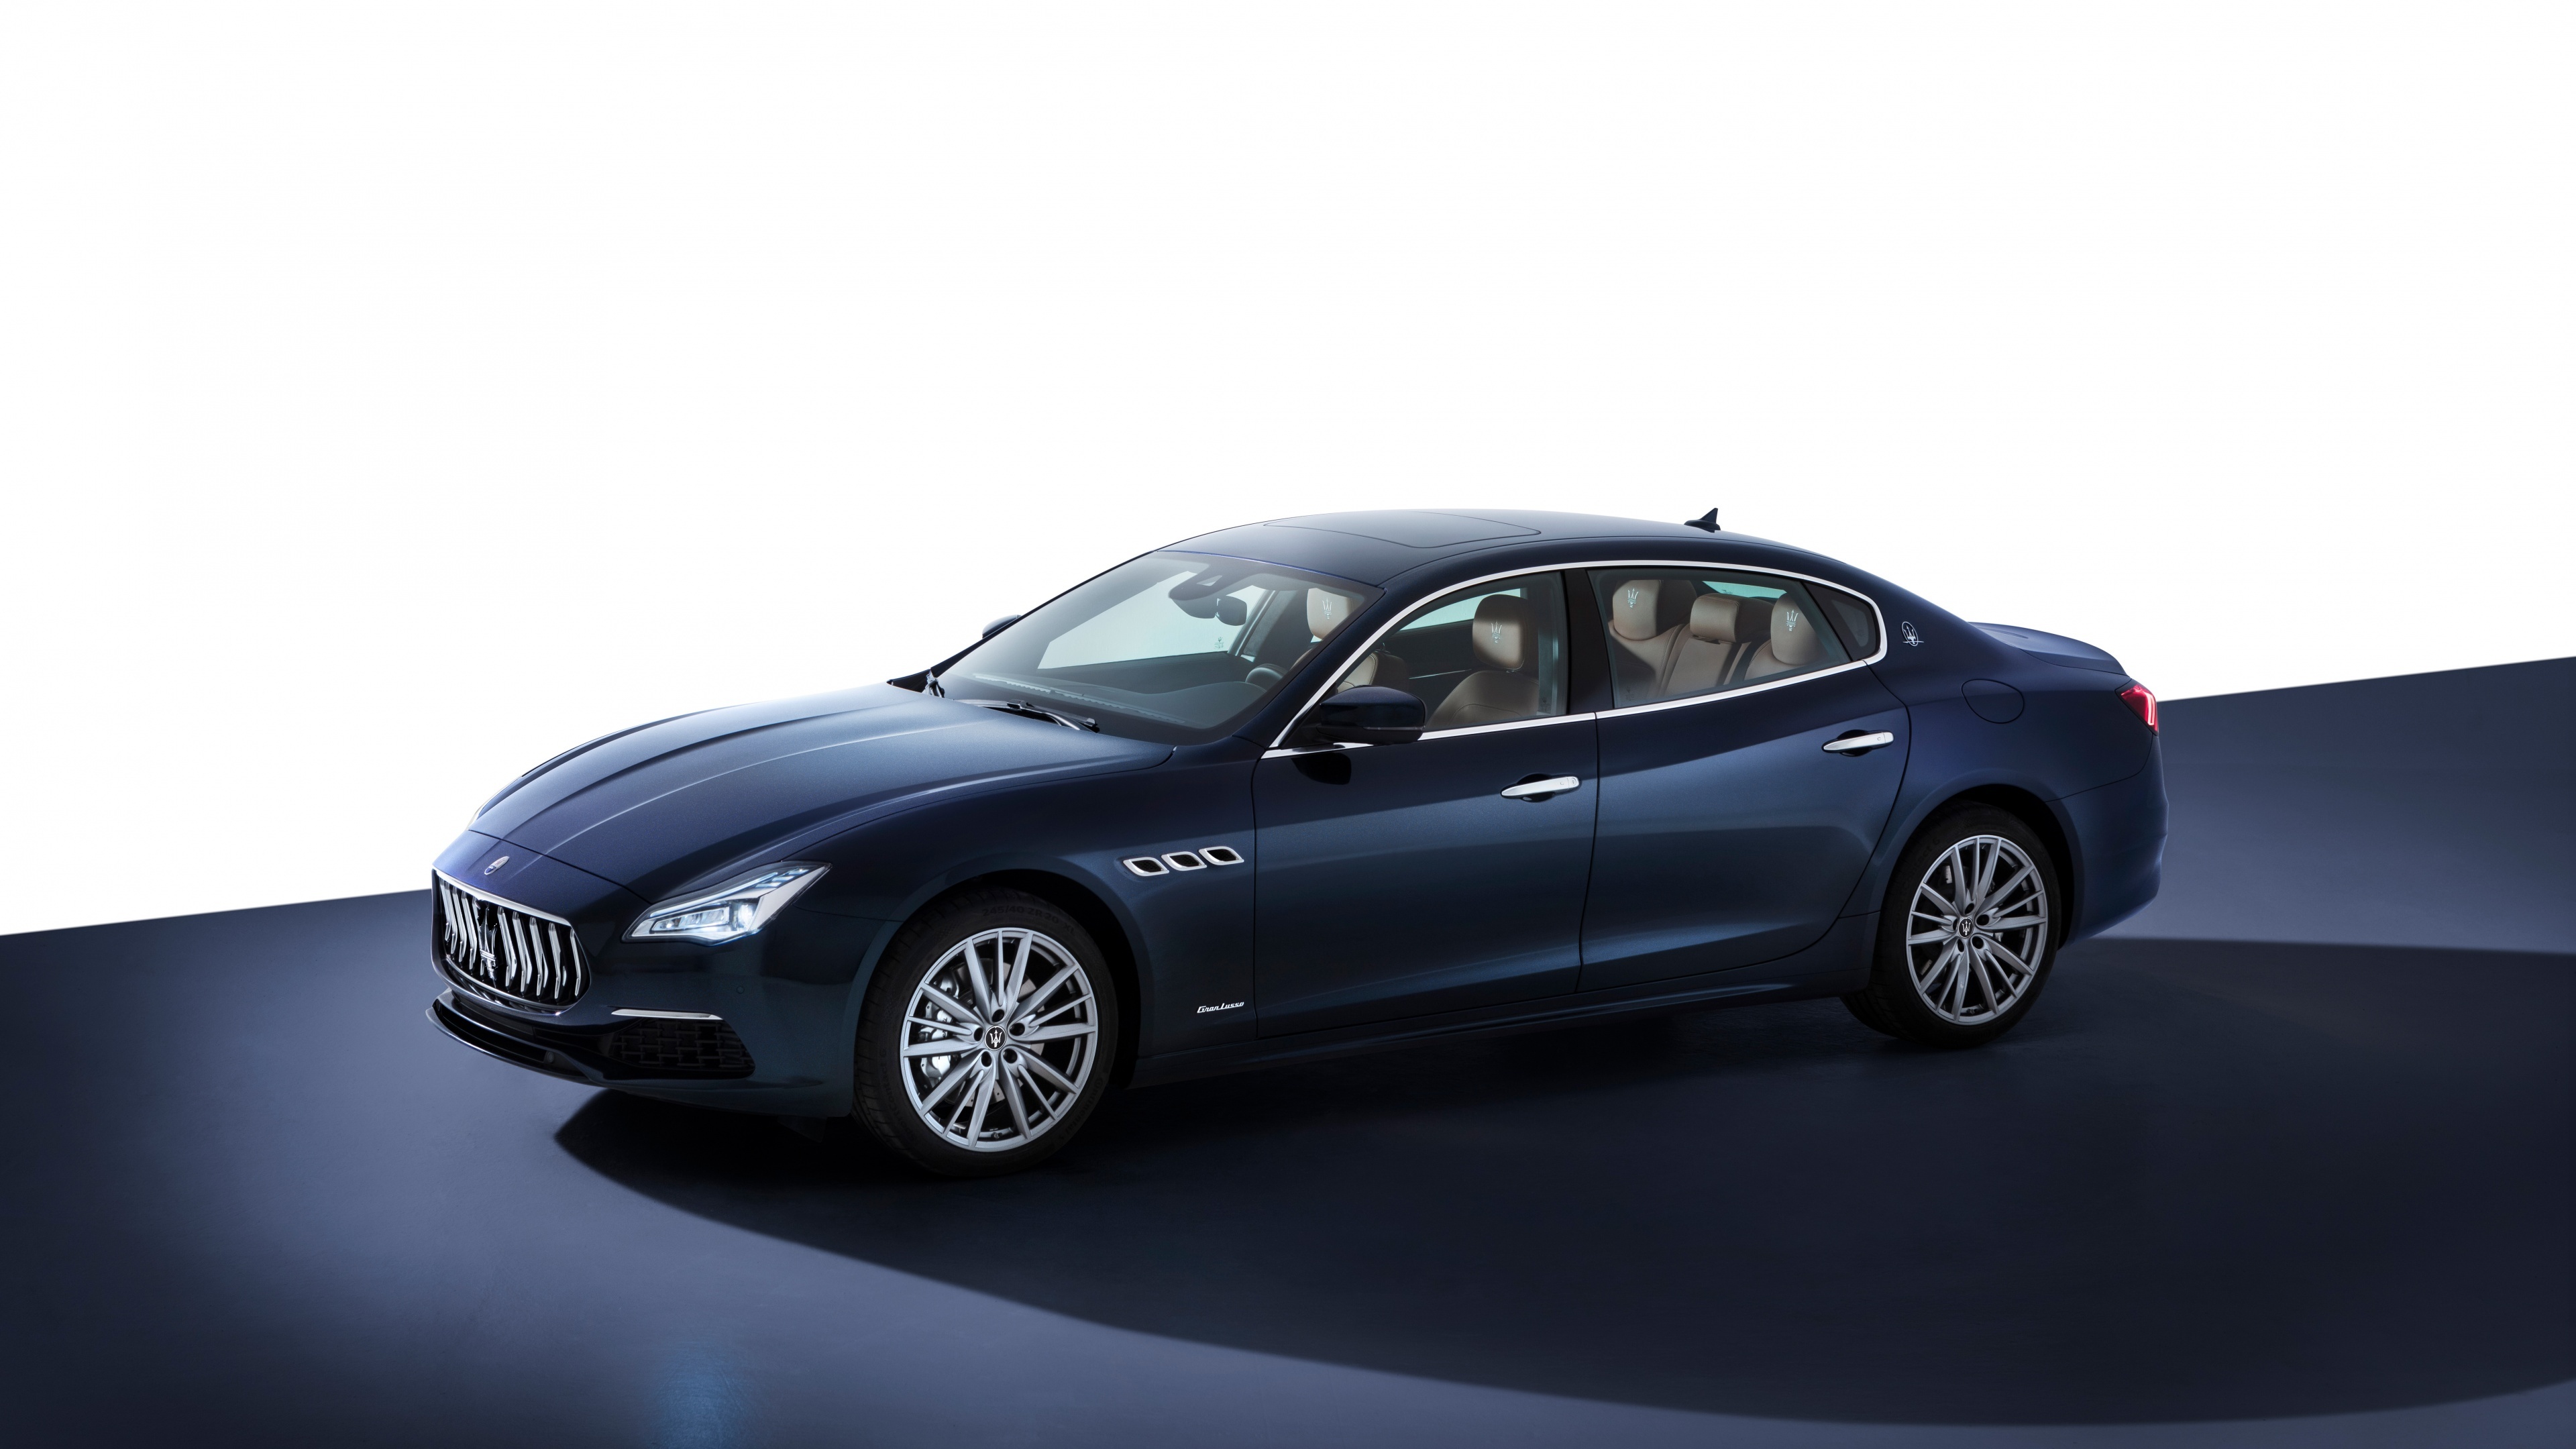 Maserati Quattroporte, Luxury sedan, Powerful performance, Exquisite craftsmanship, 3840x2160 4K Desktop